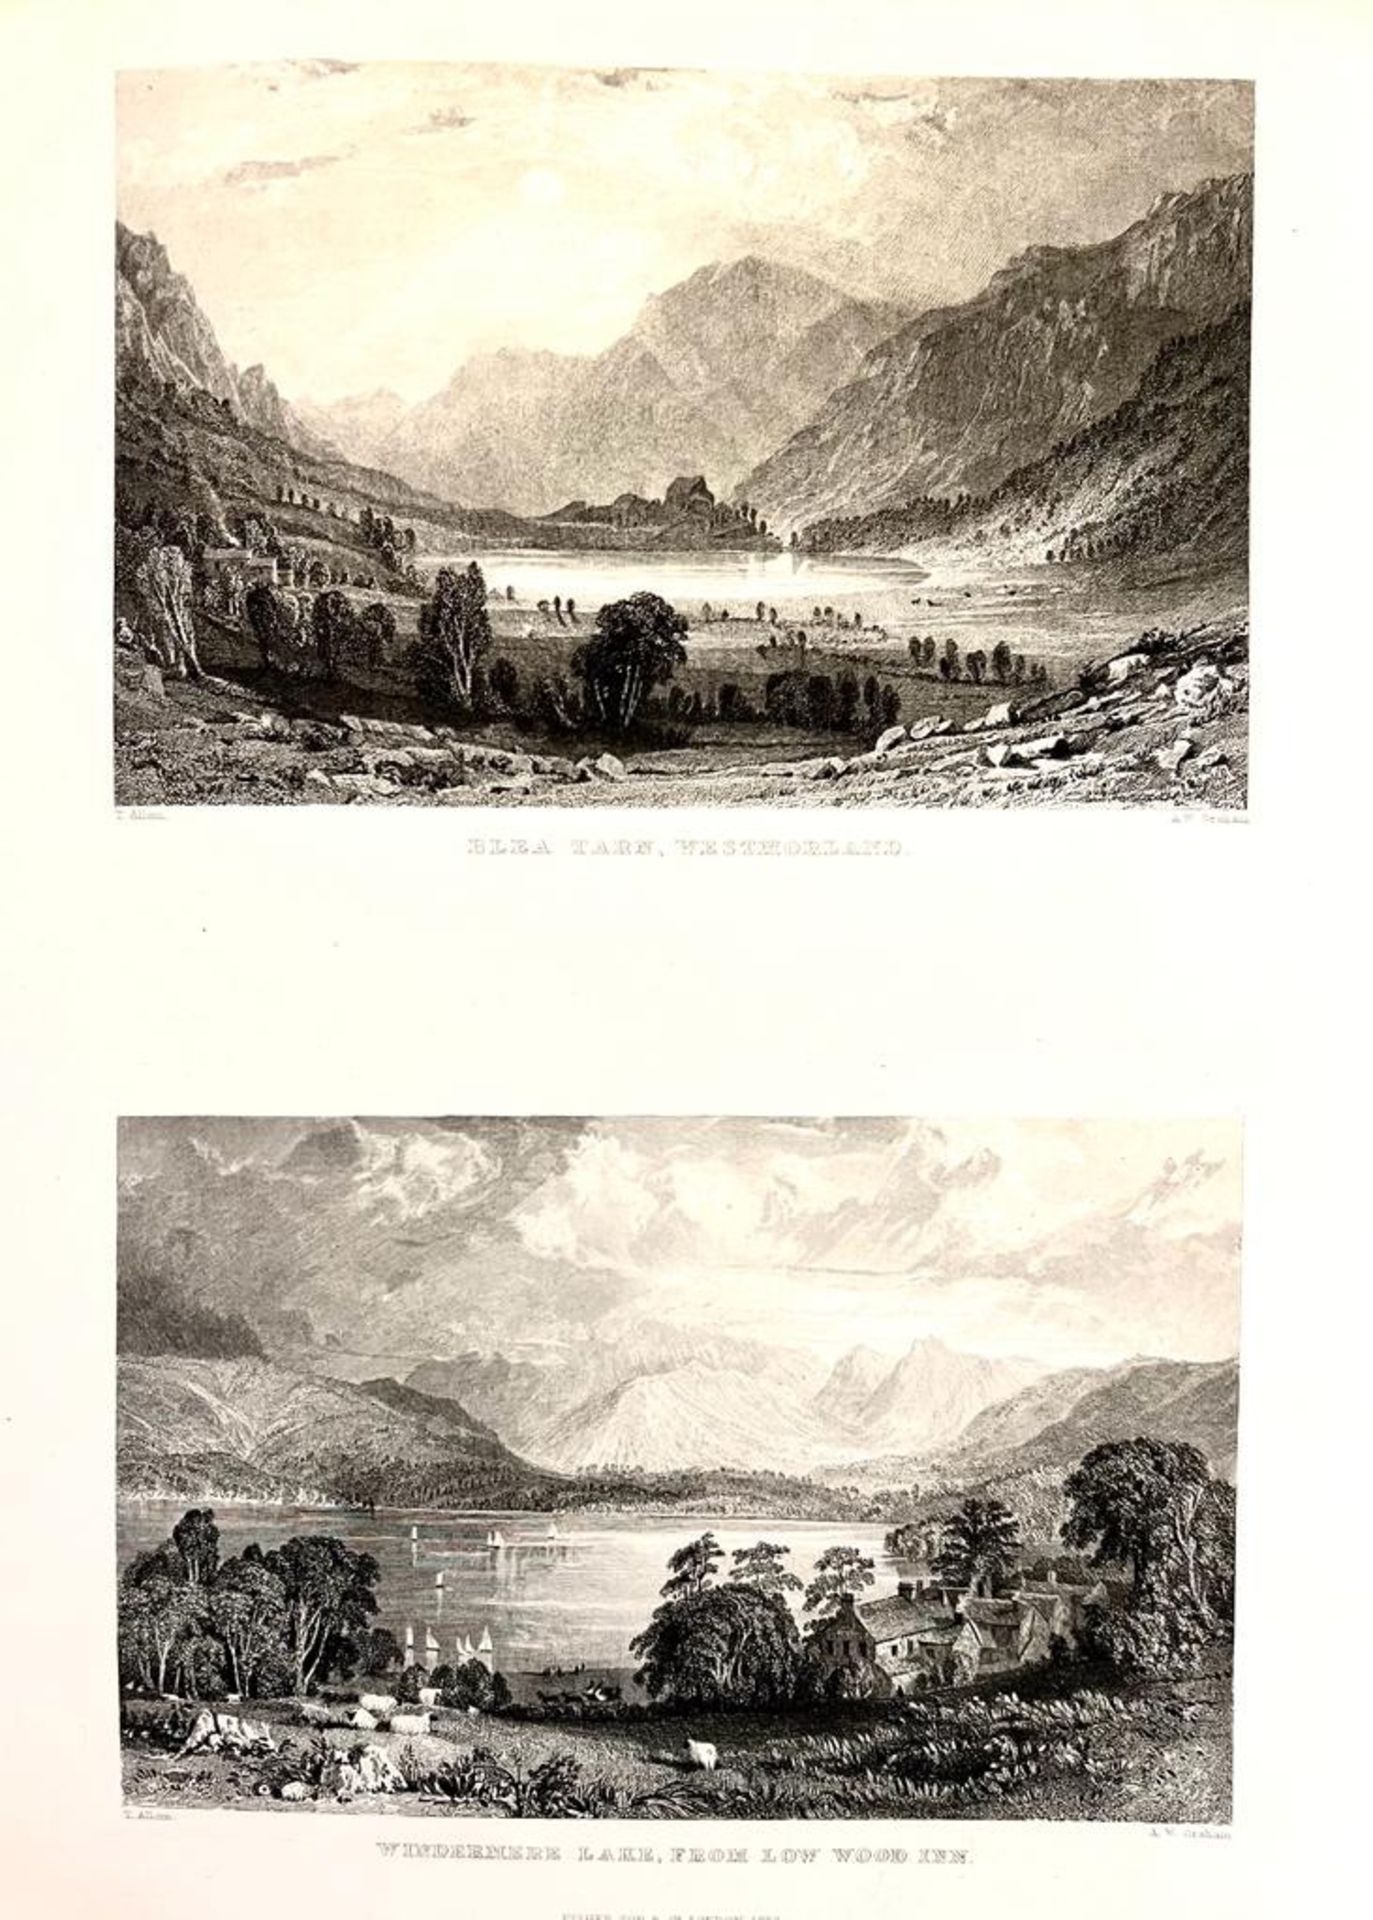 ALLOM, THOMAS, WESTMORLAND, CUMBERLAND, DURHAM, ILLUSTRATED 1832, THREE VOLUMES, CLOTH BACKS - Image 4 of 5